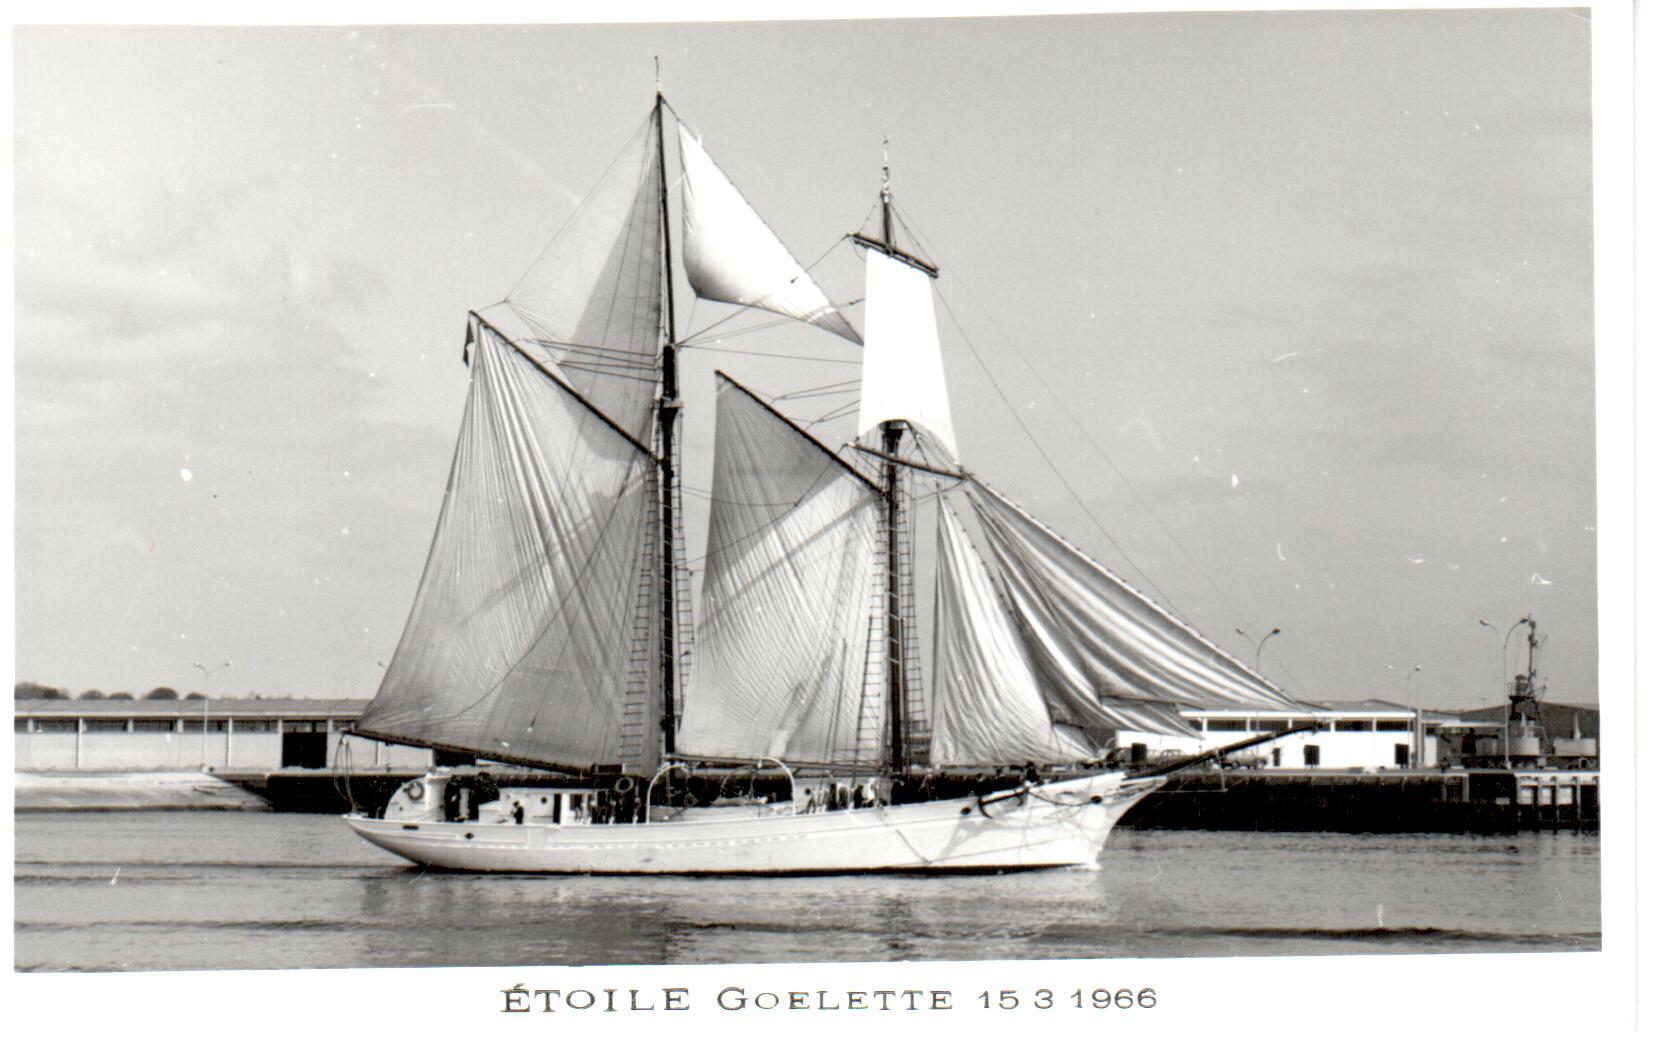 Etoile Golette 1 3 1966